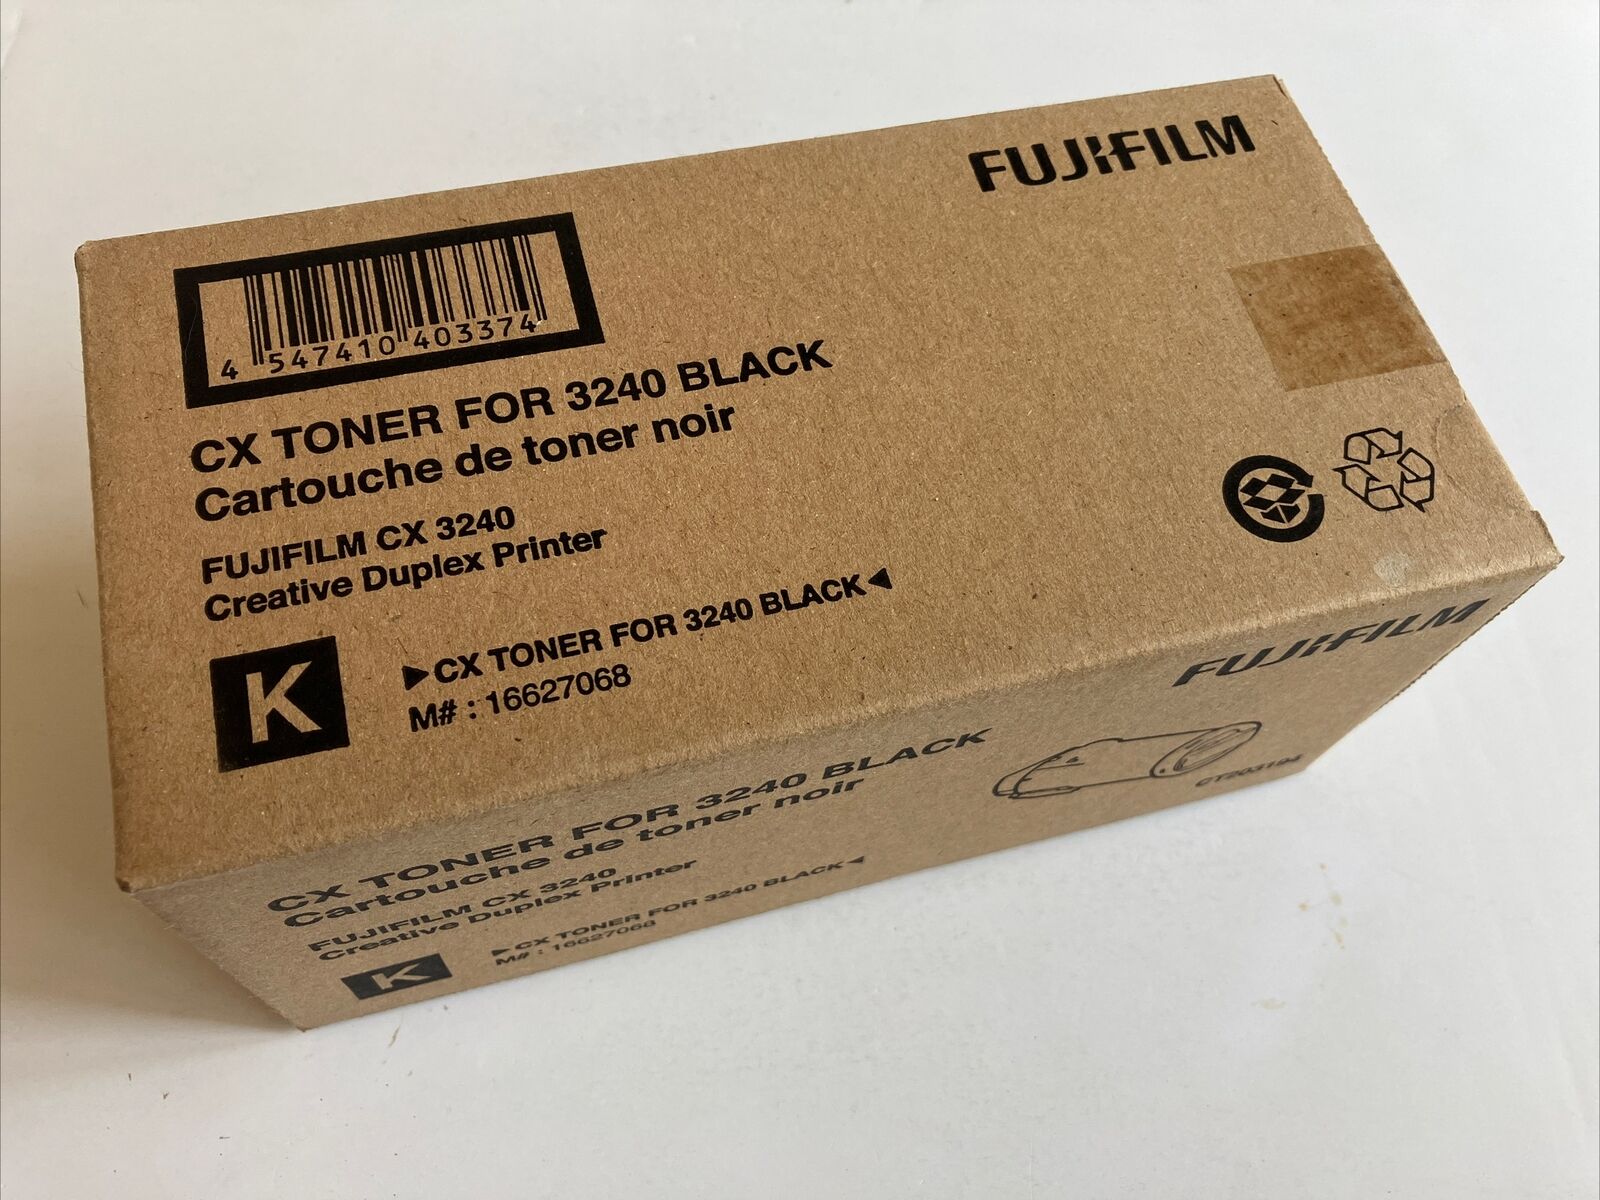 GENUINE Fujifilm CX Toner Cartridge for 3240 BLACK - Creative Duplex Printer NEW